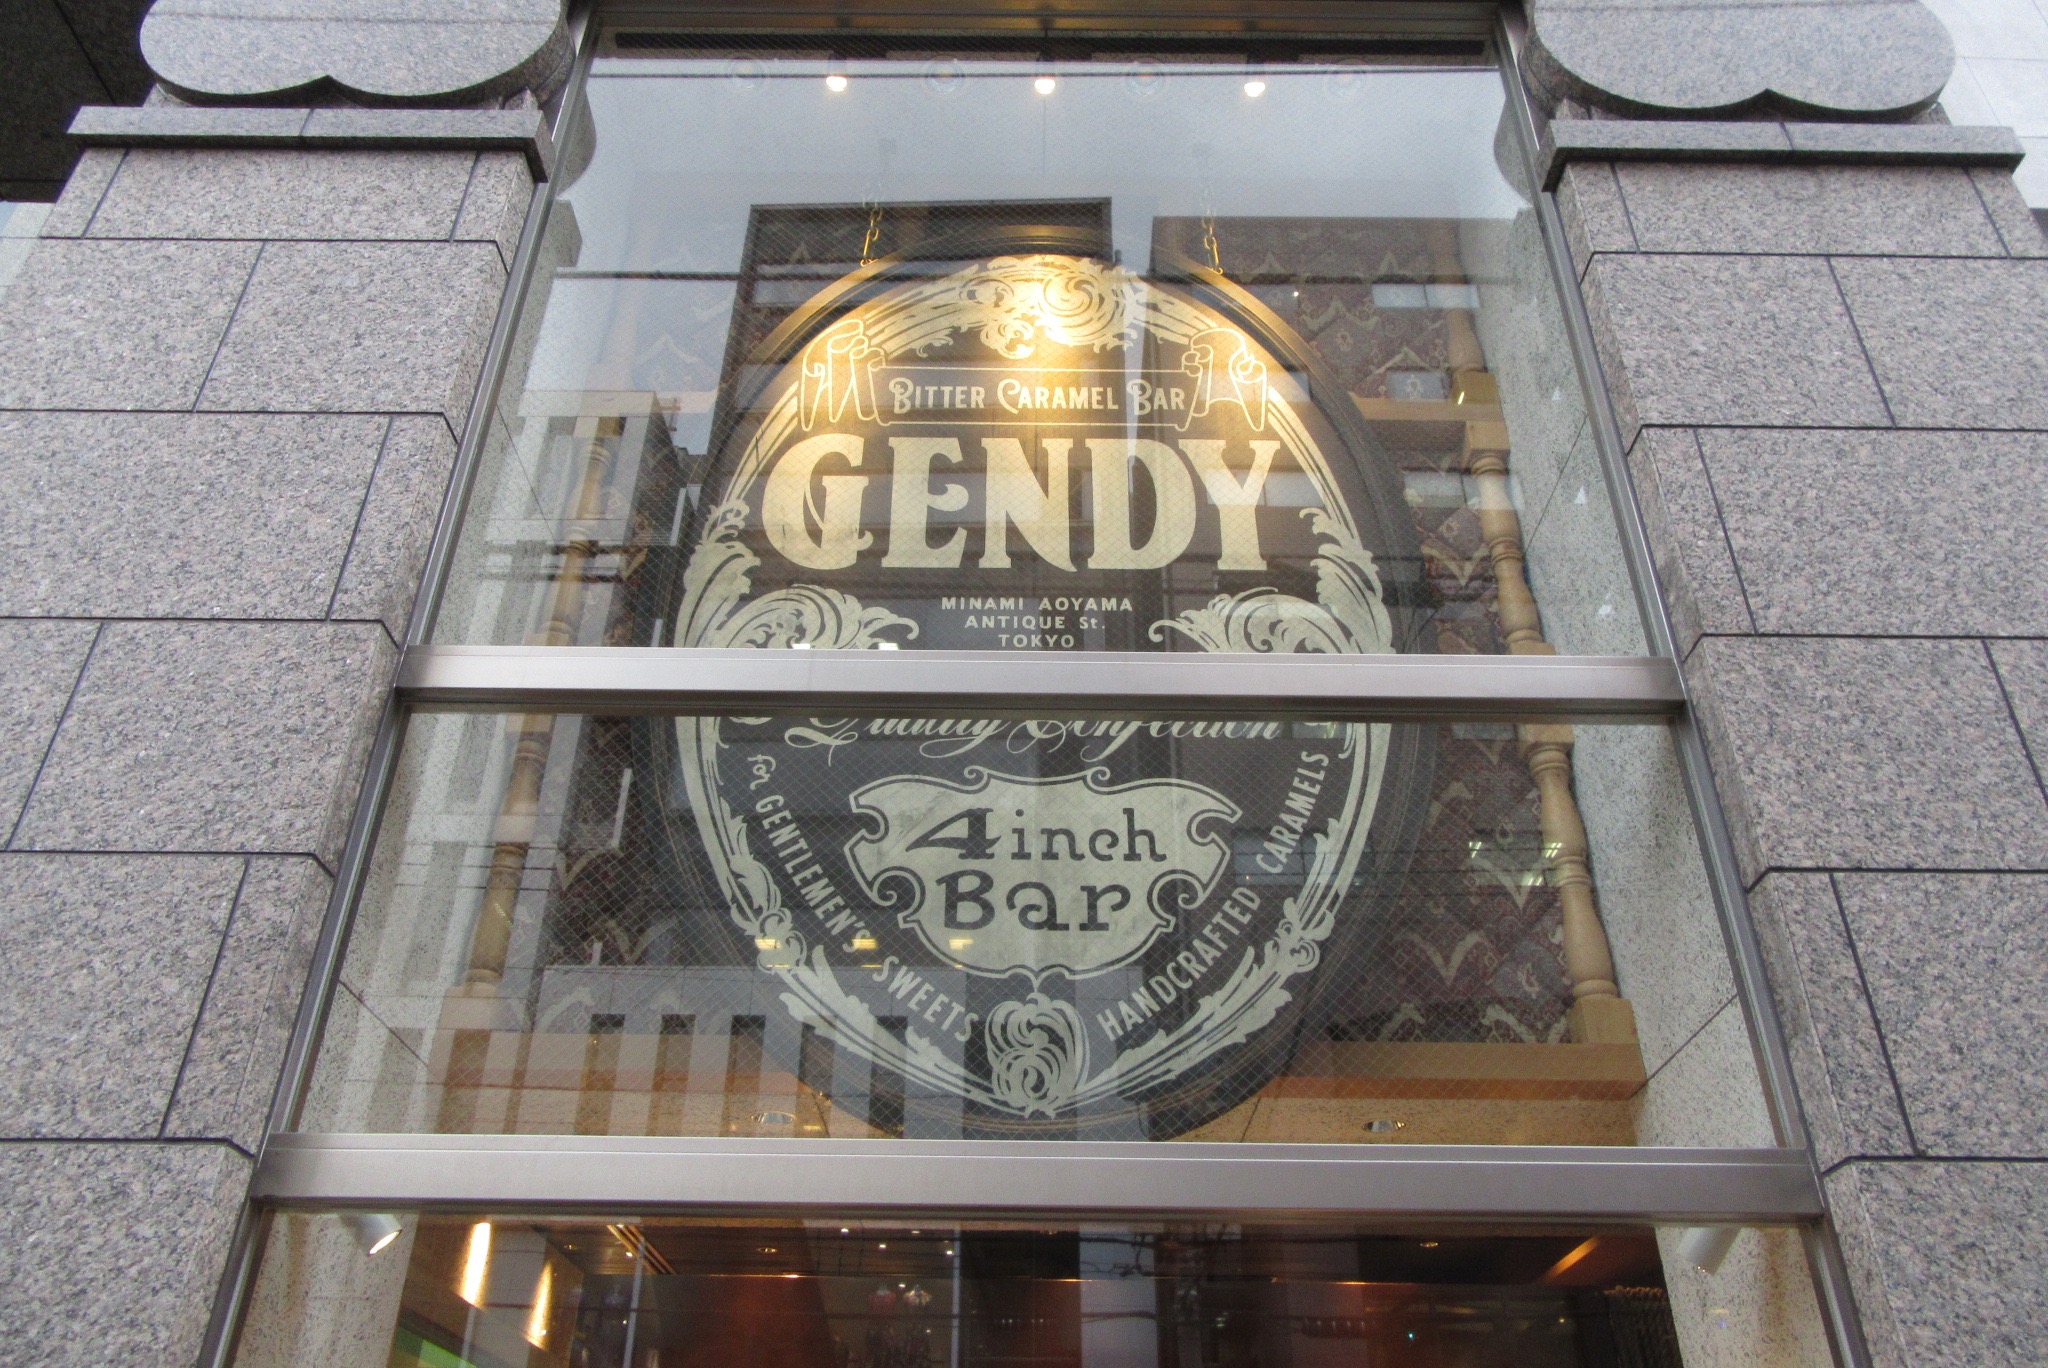 Gendy The Premium Bitter Caramel Bar Gendy 大人のお酒のお供にチャレンジ 紳士のチャレンジ 男子専科